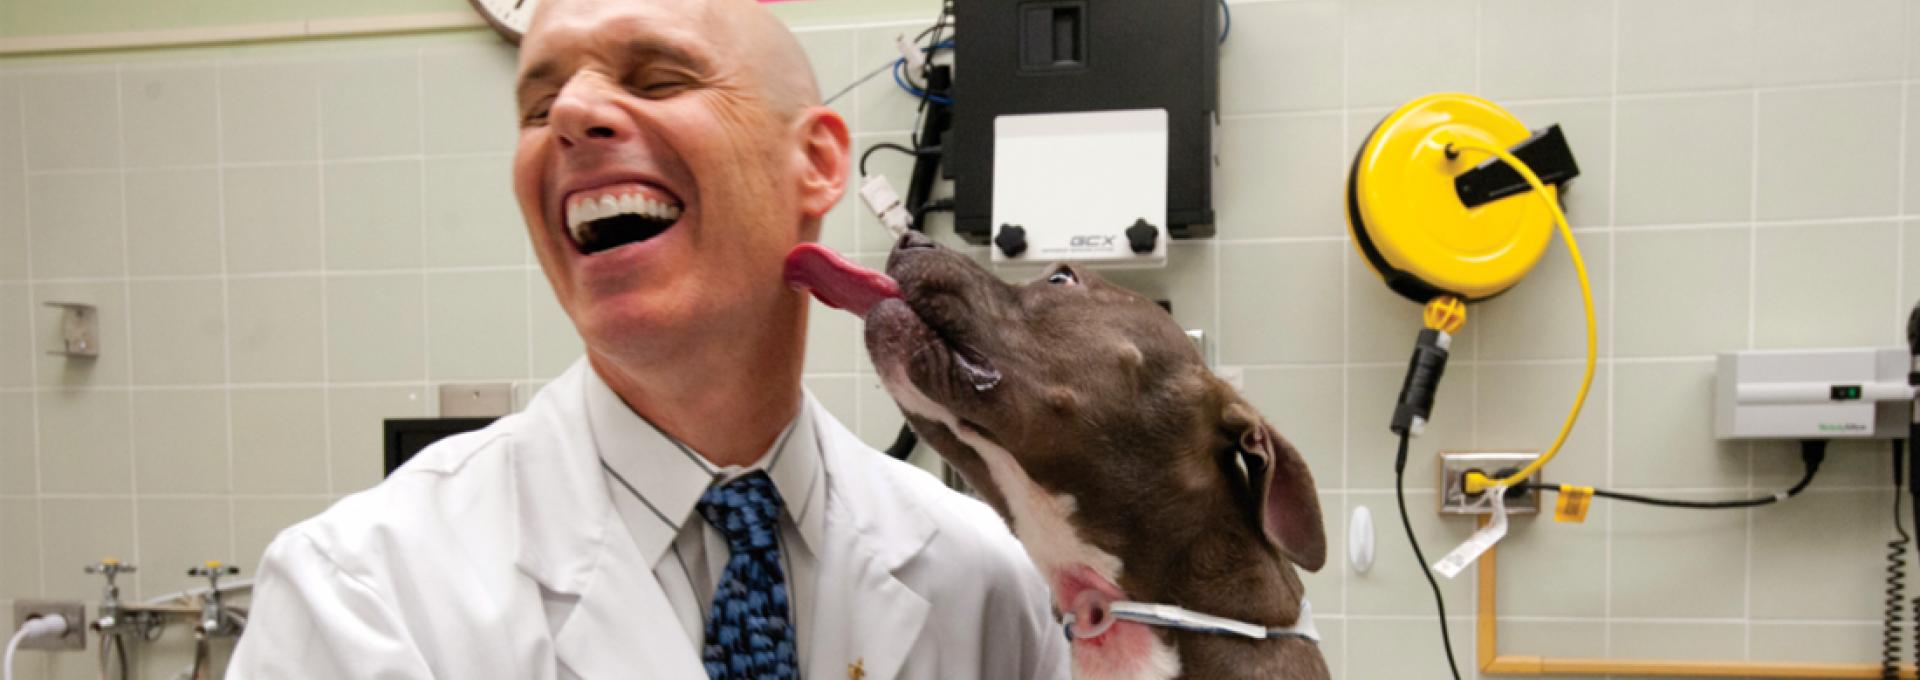 Dog licking veterinarian's face